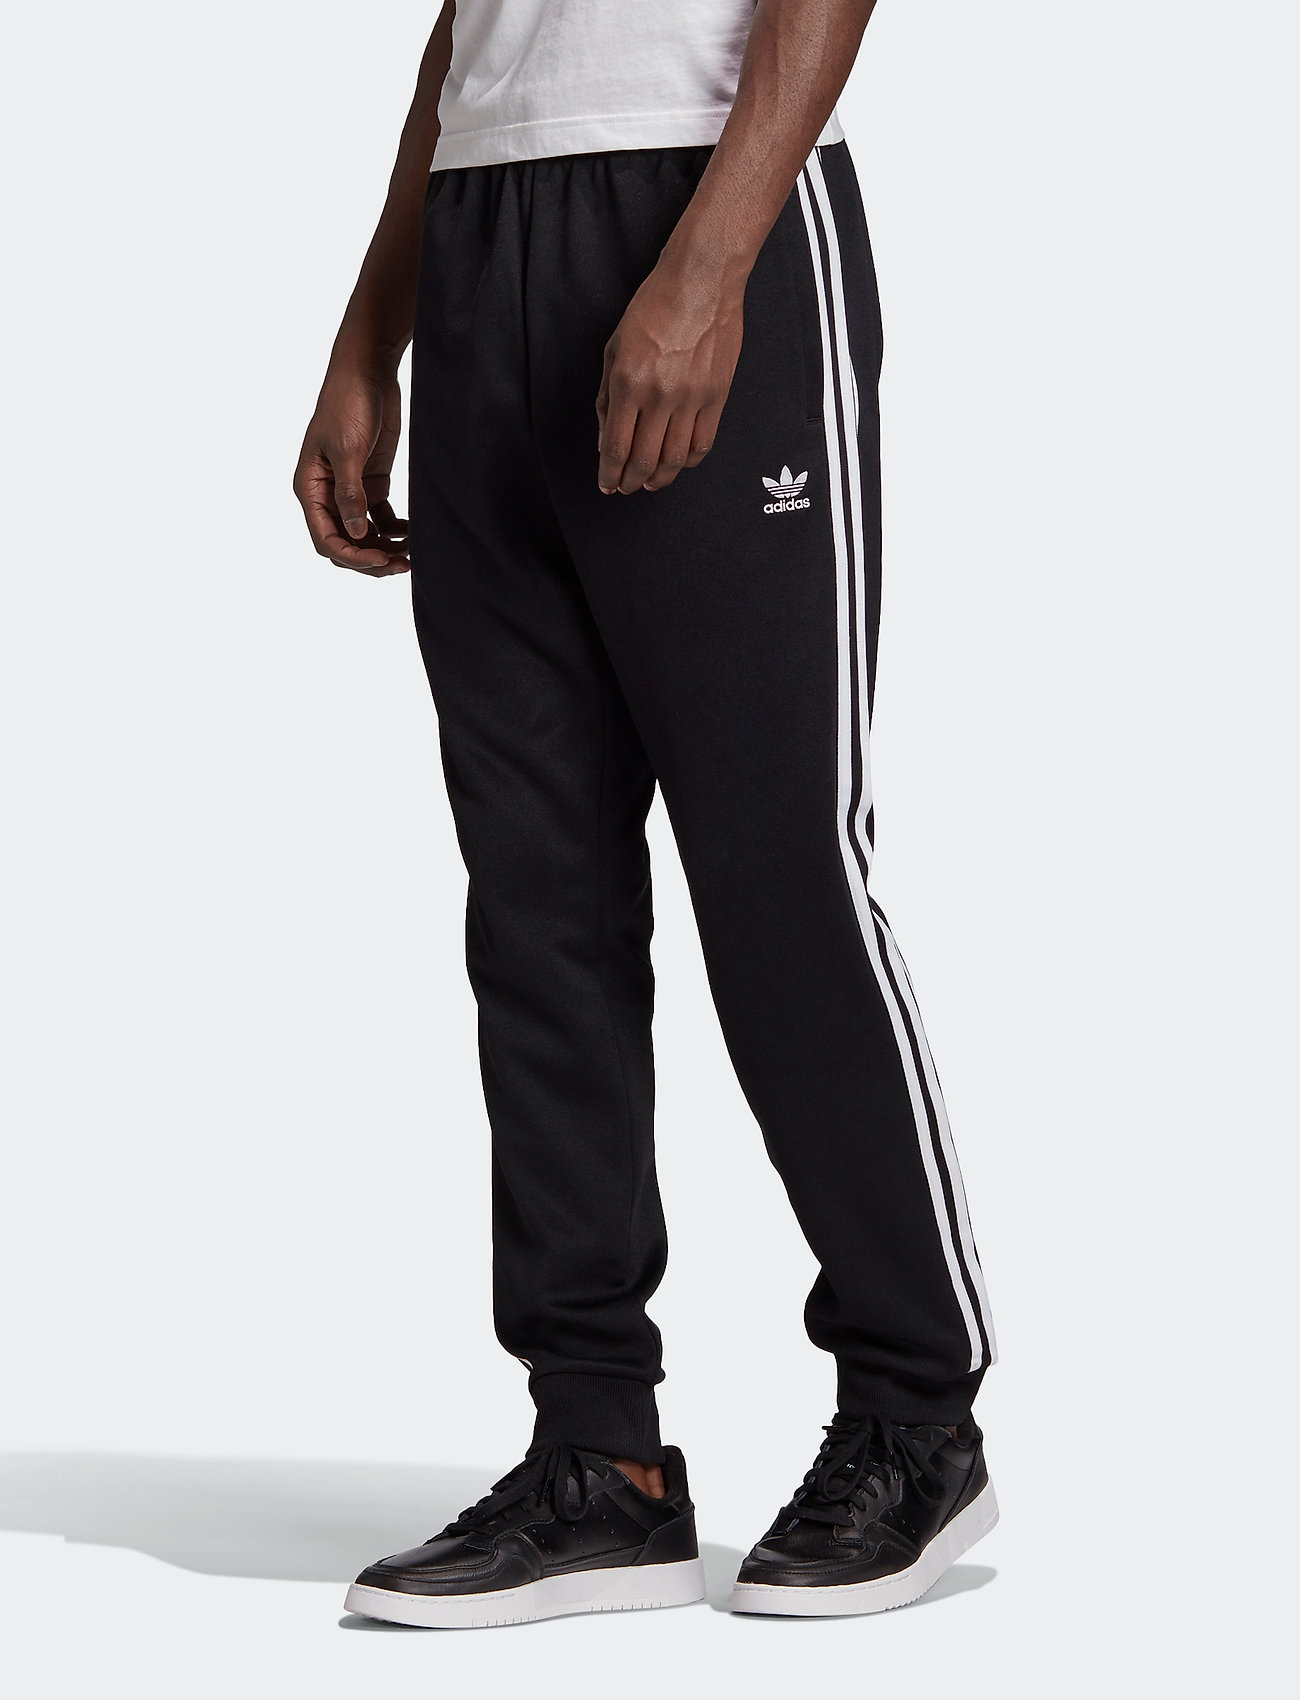 adidas Adicolor Primeblue Superstar Track Pants - Clothing | Boozt.com